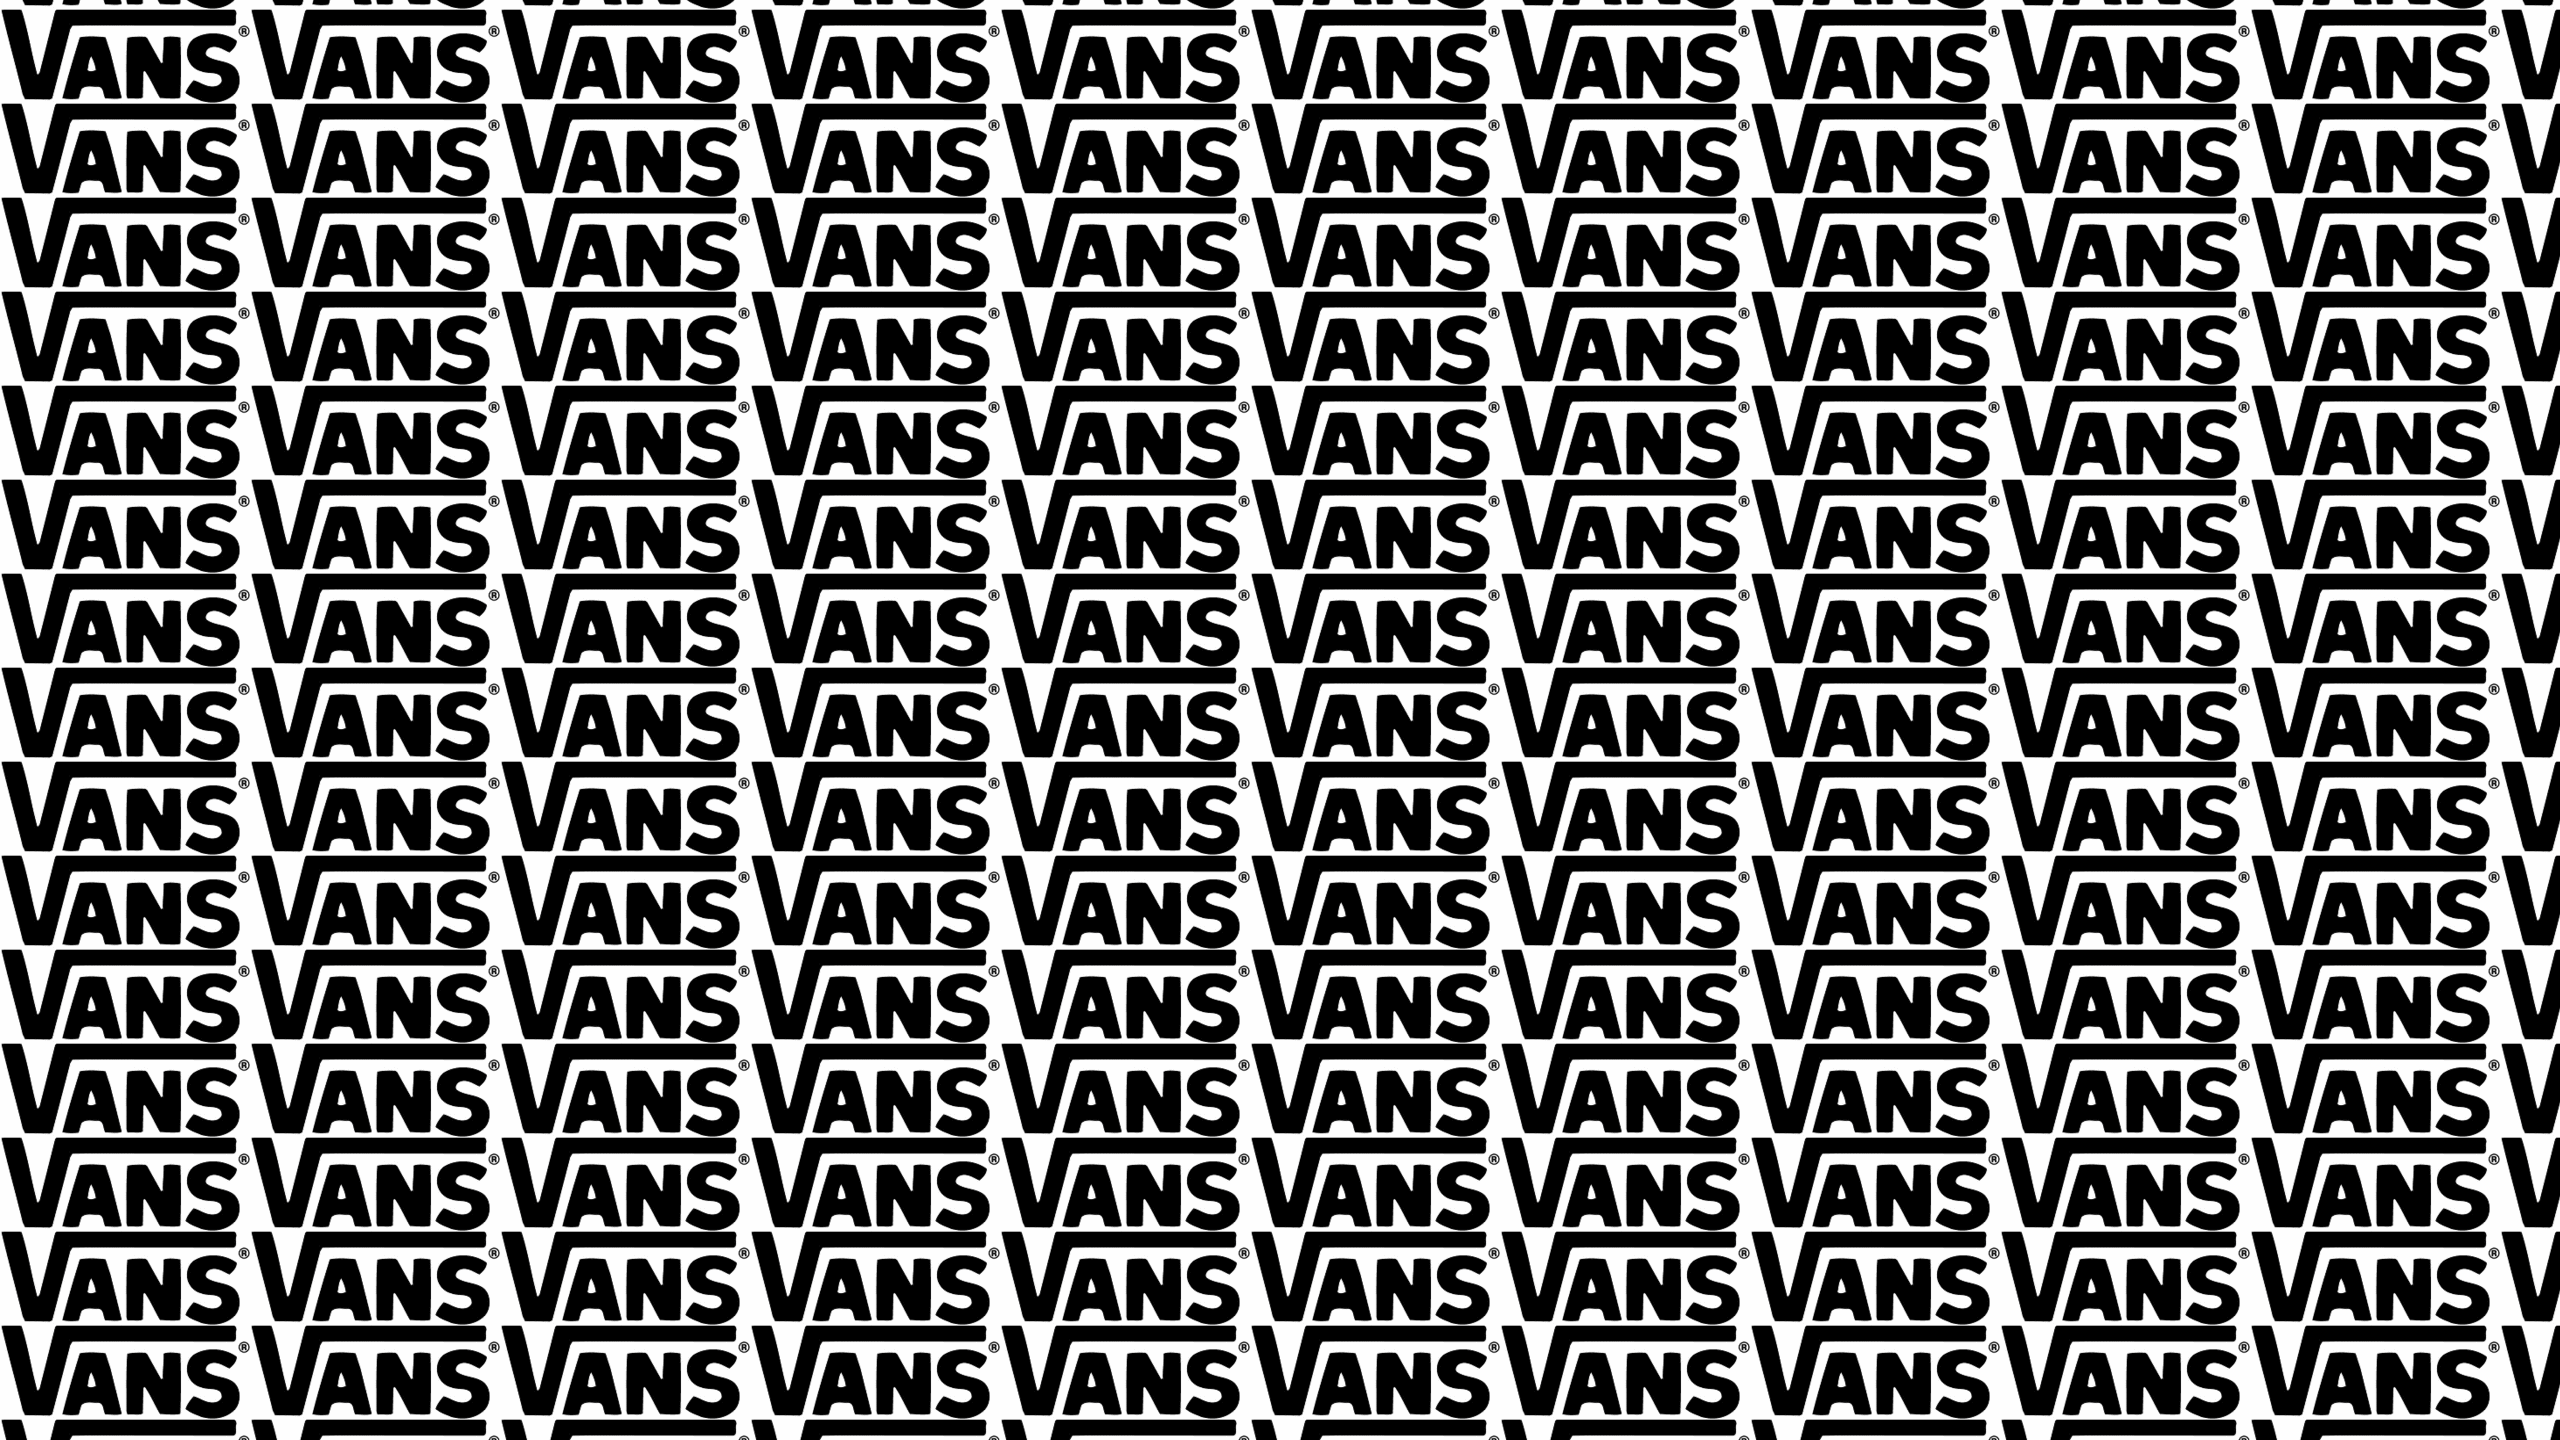 Vans Wallpaper Tumblr